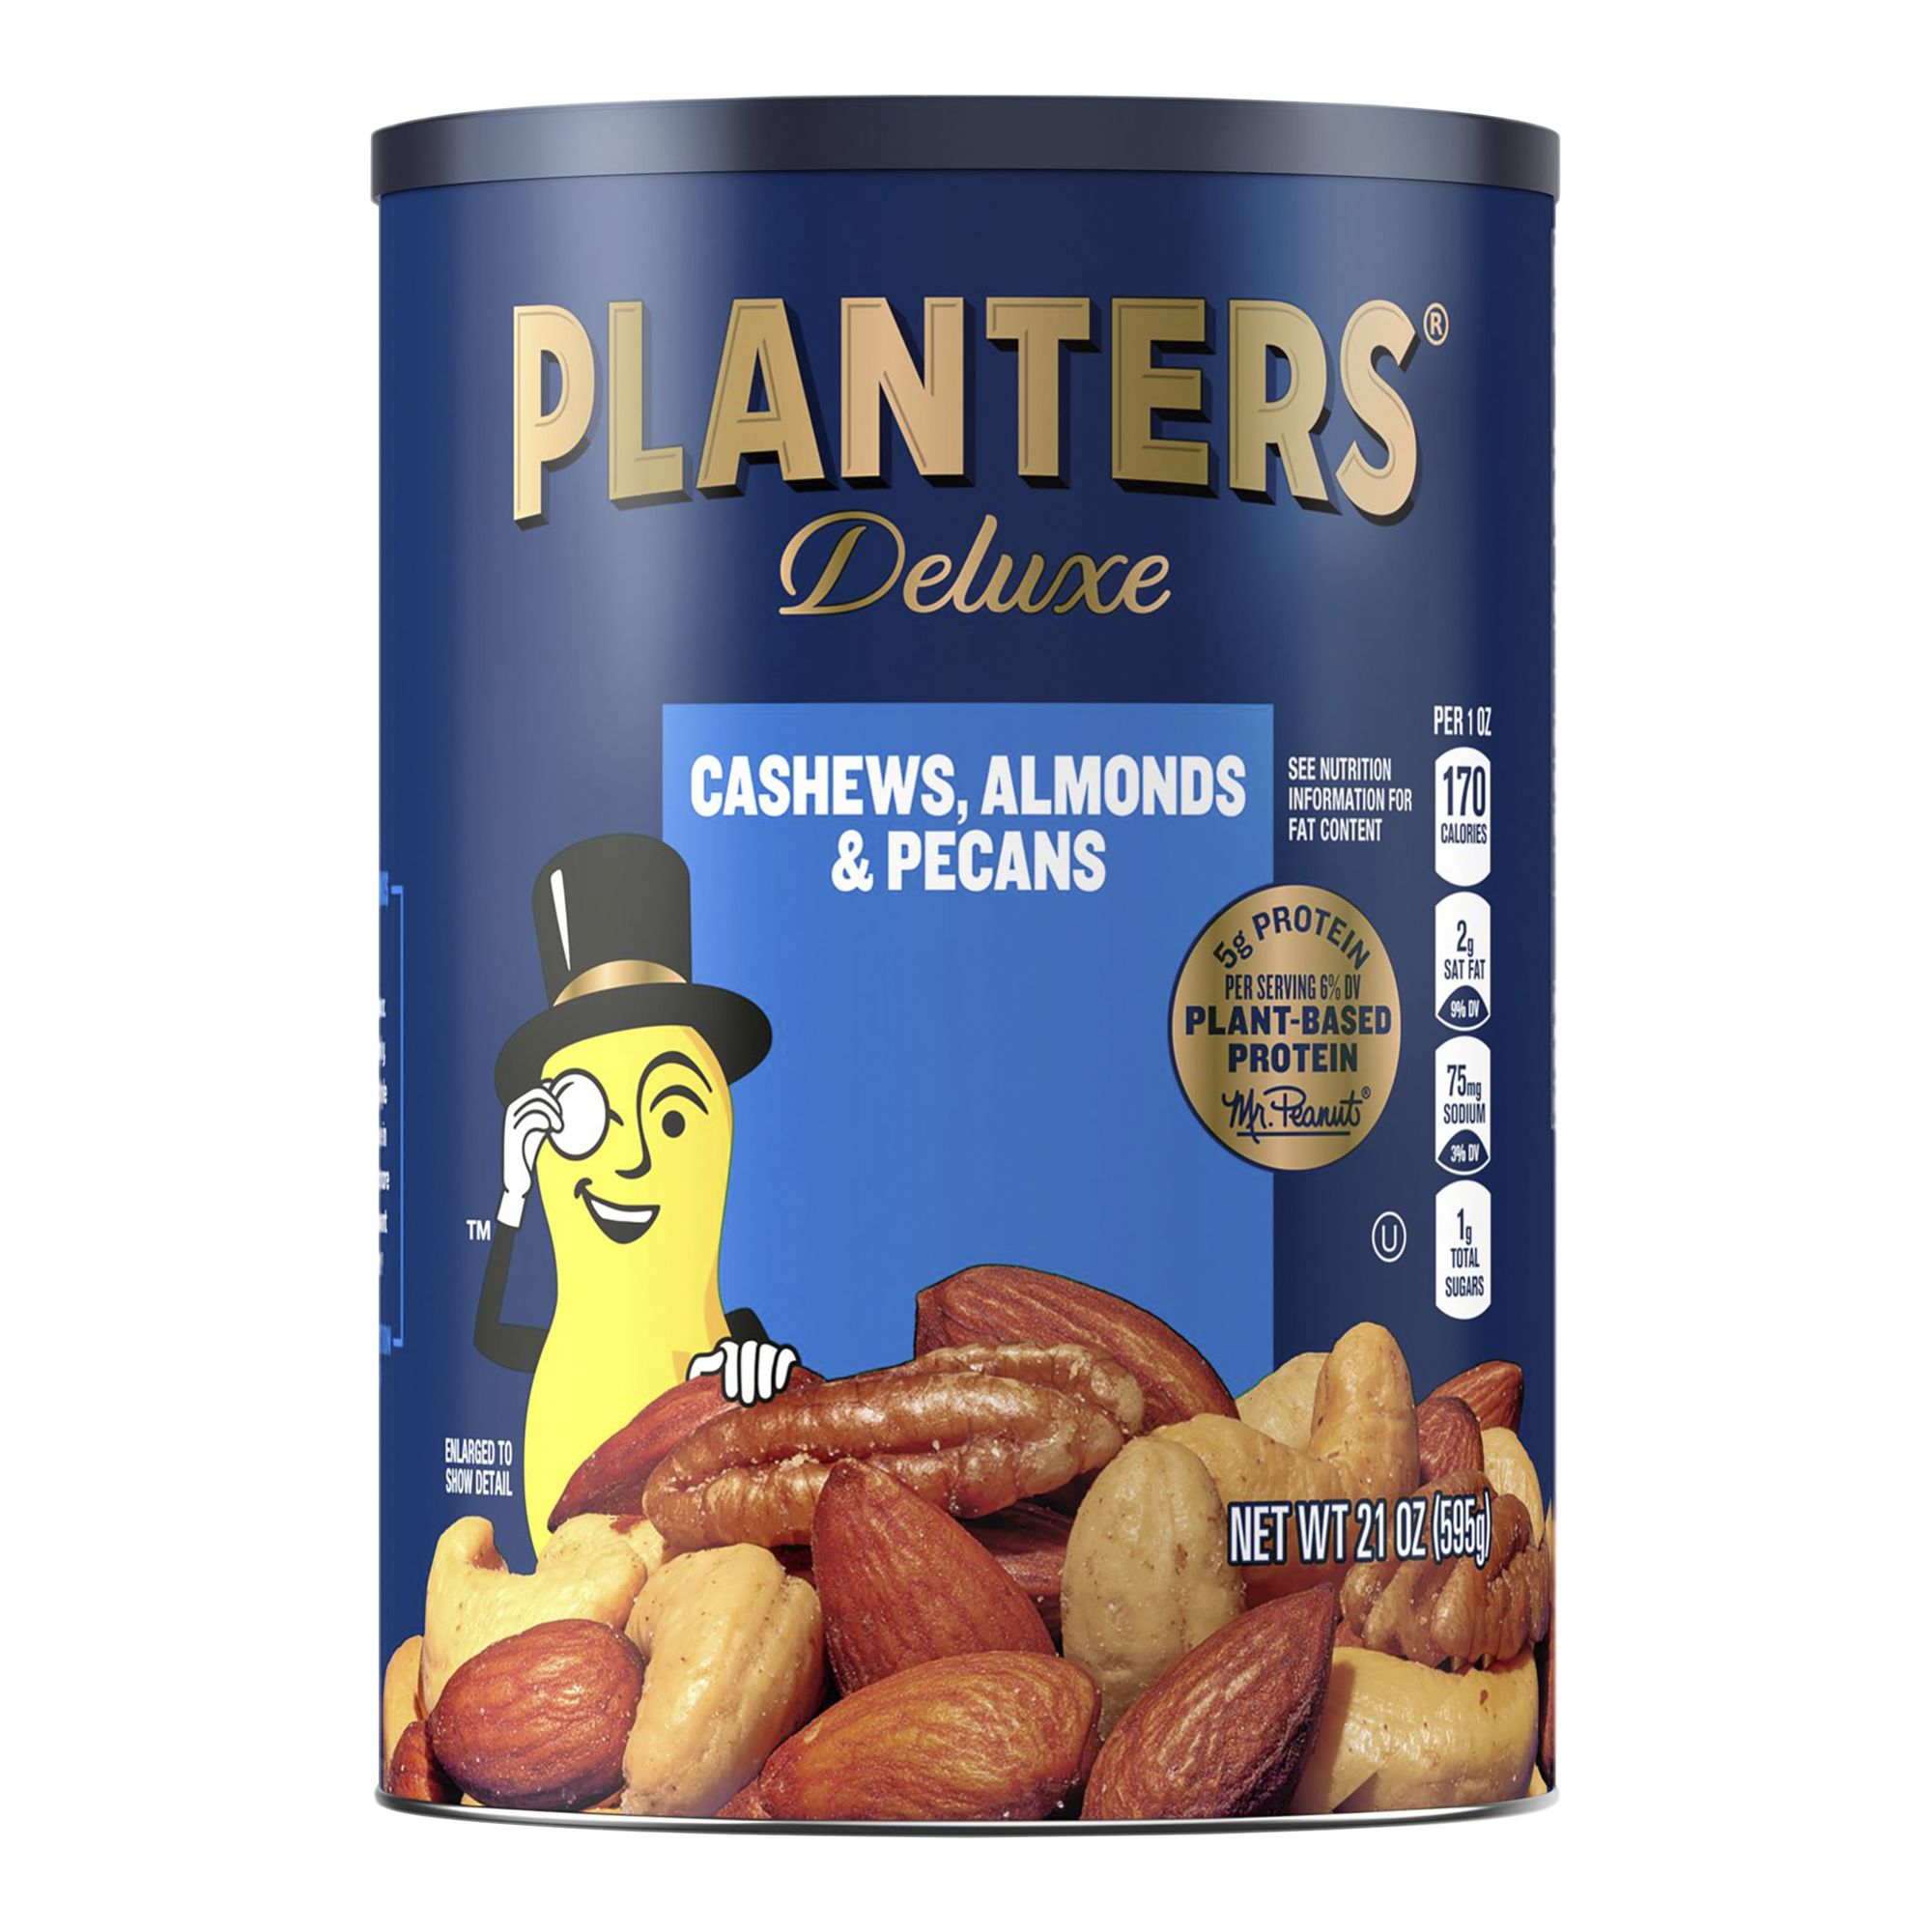 Planters Cashew Lovers Mix, 21 oz.